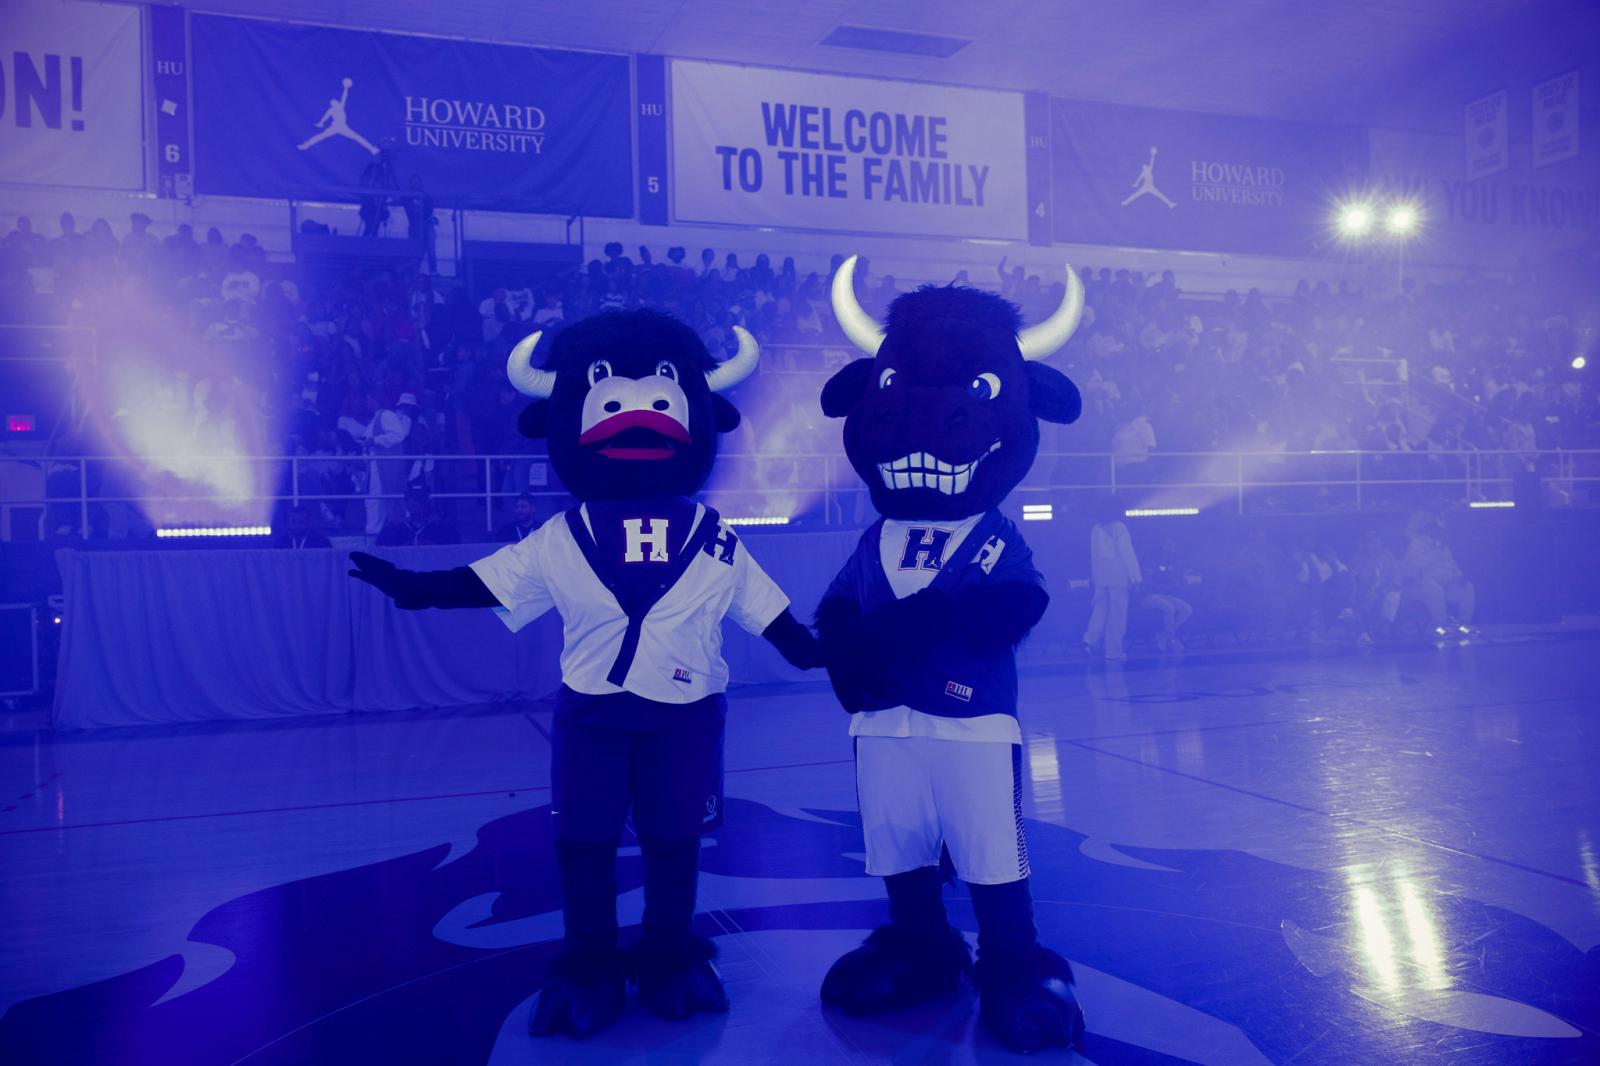 Howard Bison mascots in blue lighting